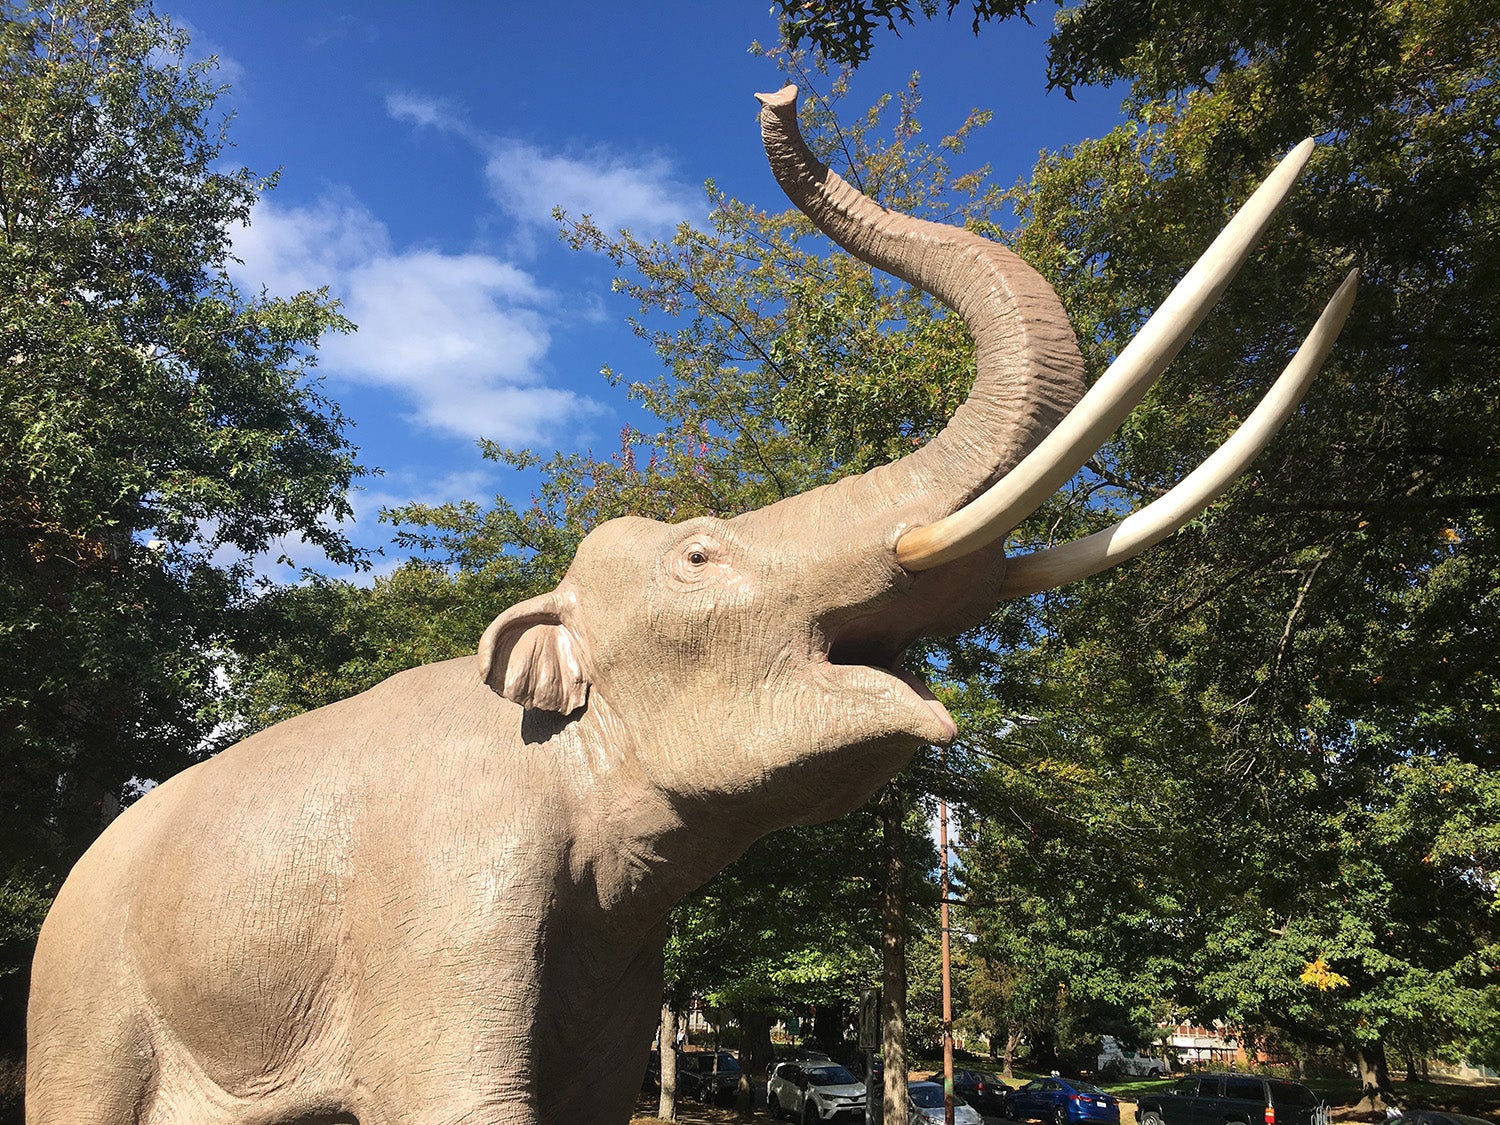 The museum's Columbian mammoth sculpture